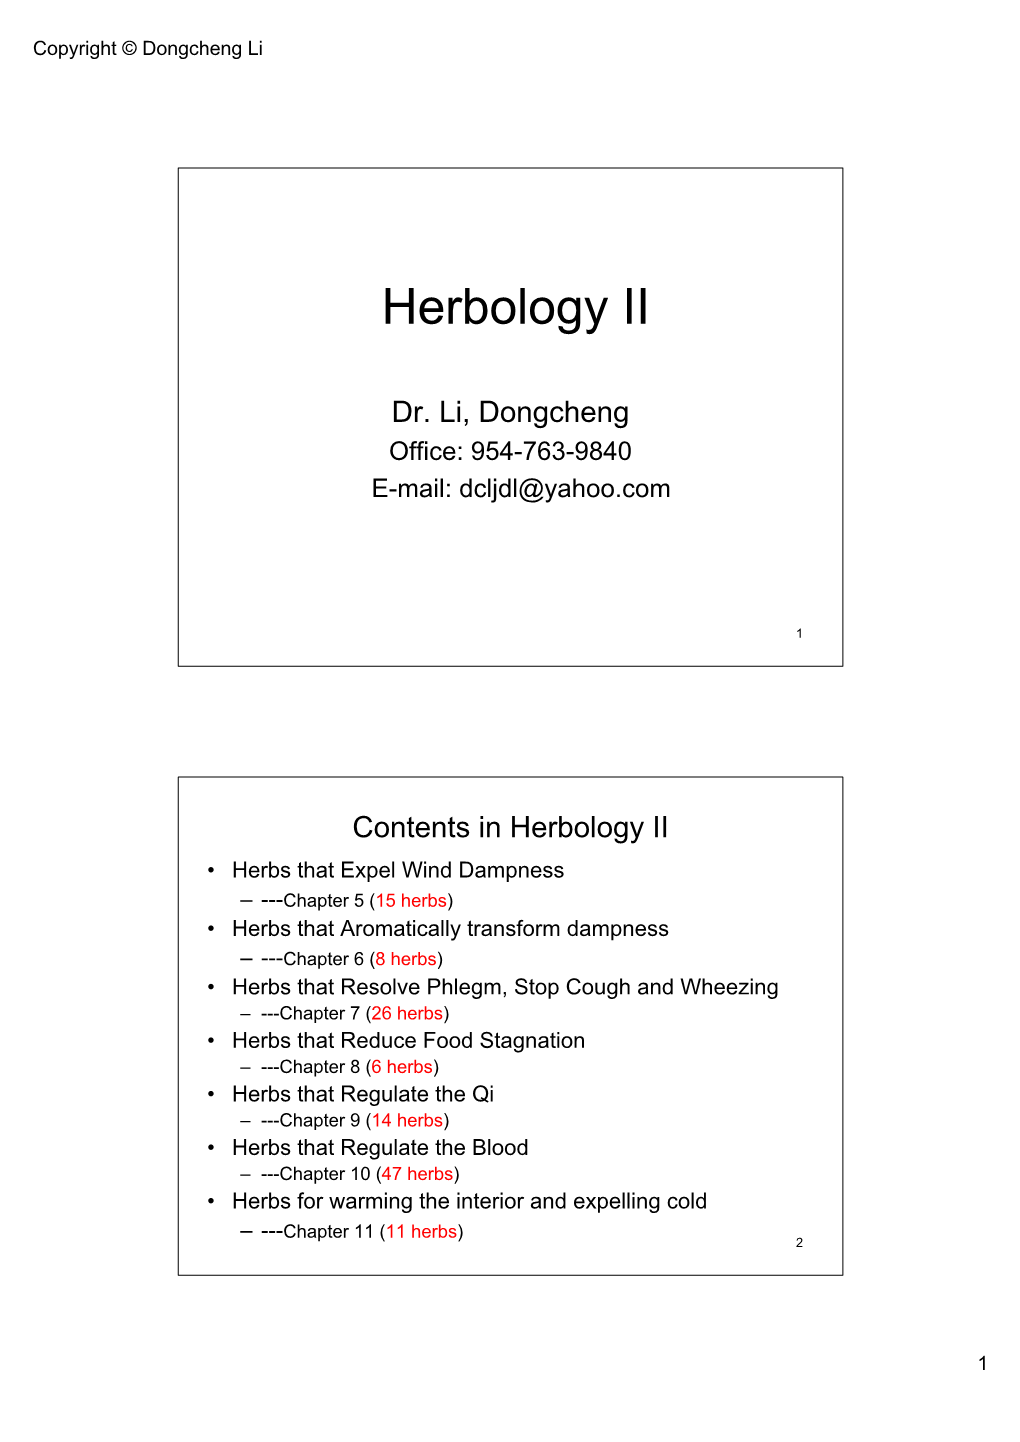 Herbology II